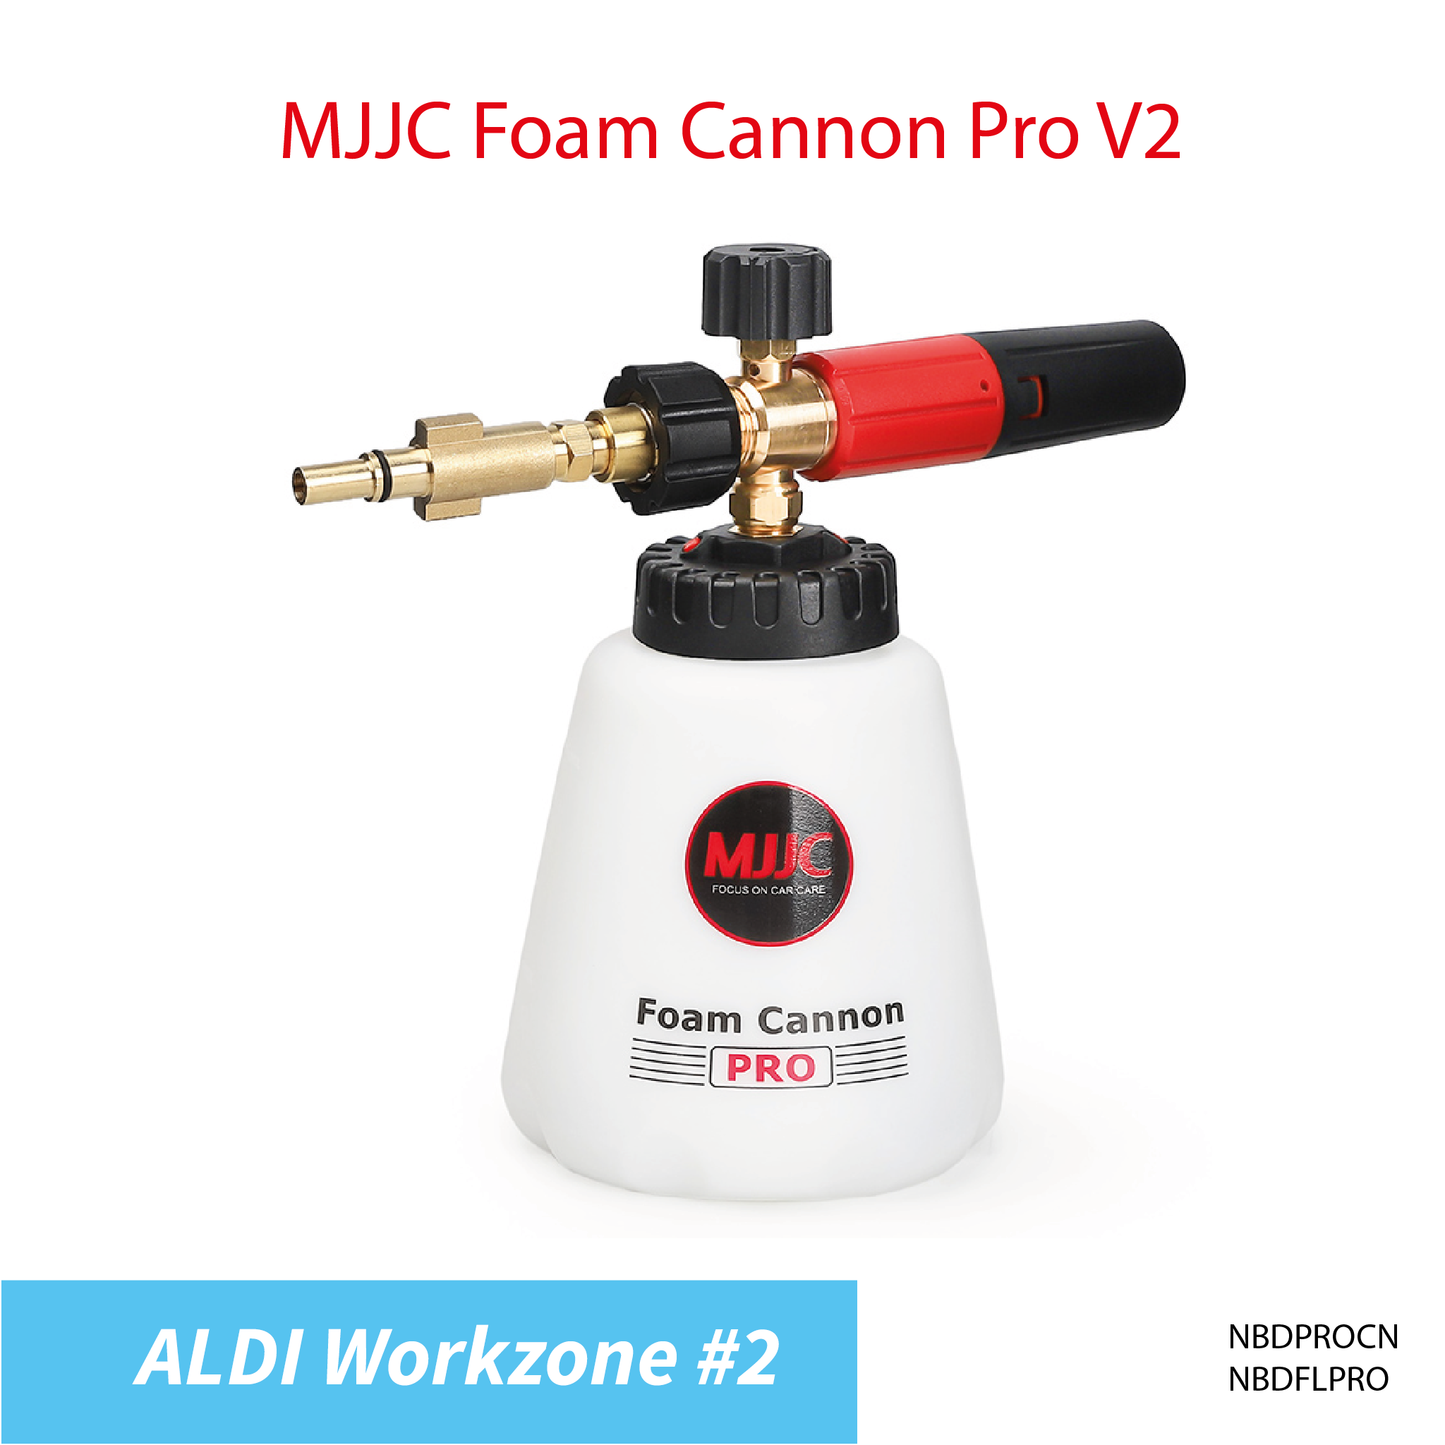 Aldi Workzone pressure washer - MJJC Foam Cannon Pro V2 (Pressure Washer Snow Foam Lance Gun)